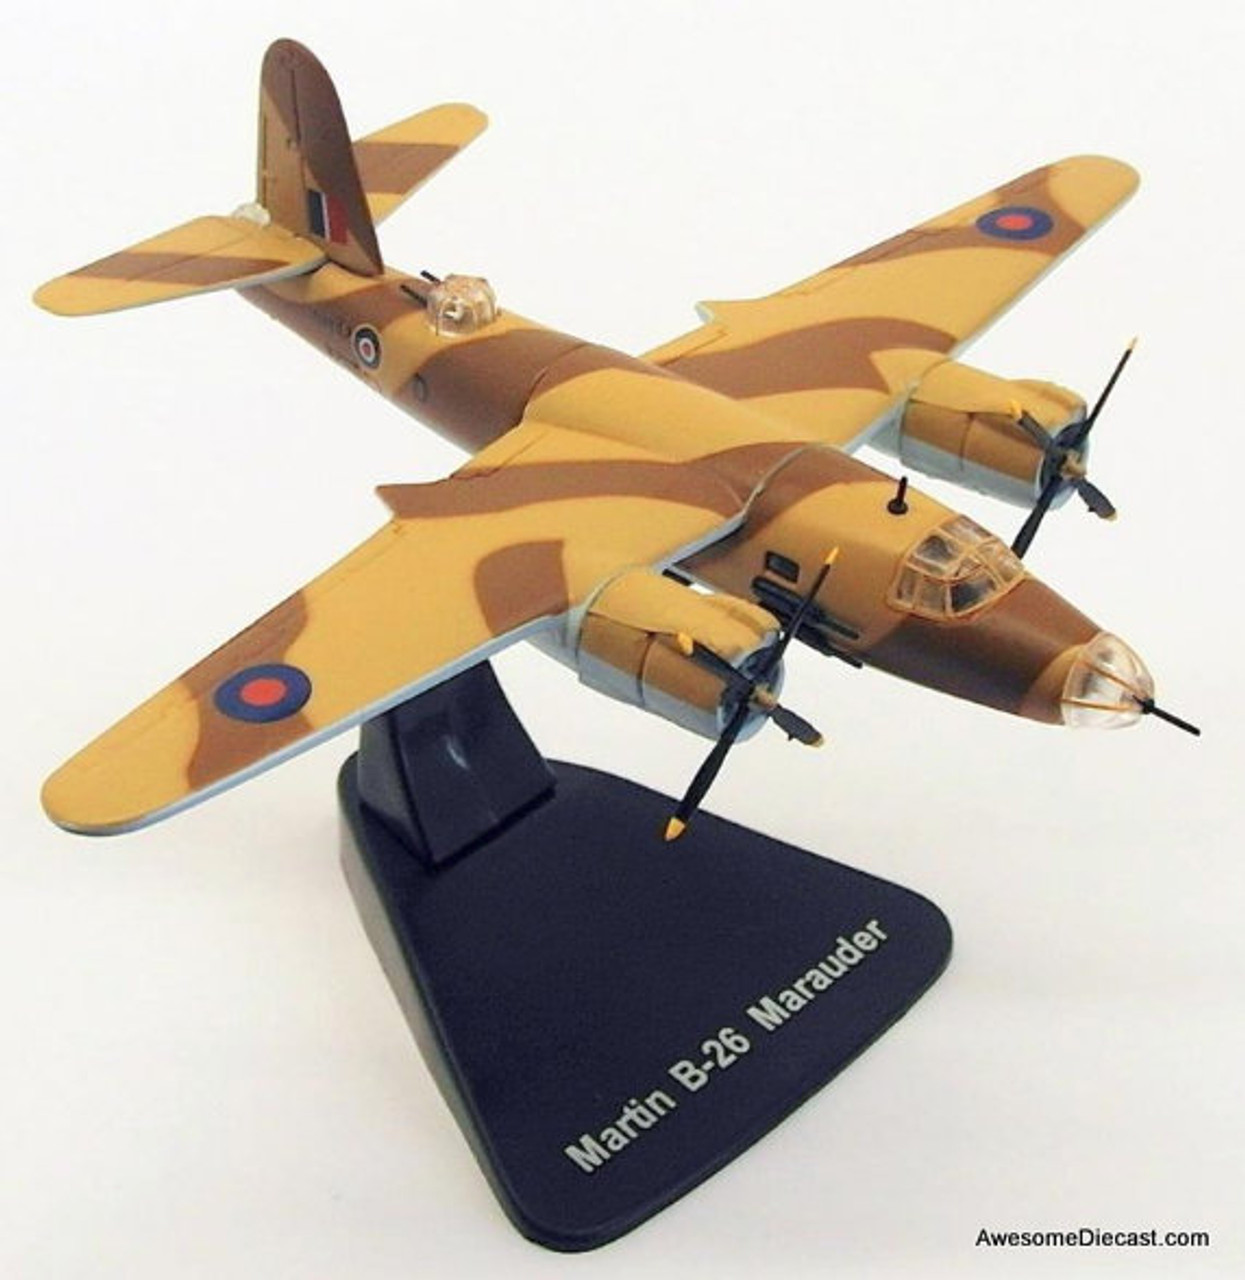 atlas editions Martin B-26 Marauder WW11 world war 2 aircraft 1:144 scale diecast model